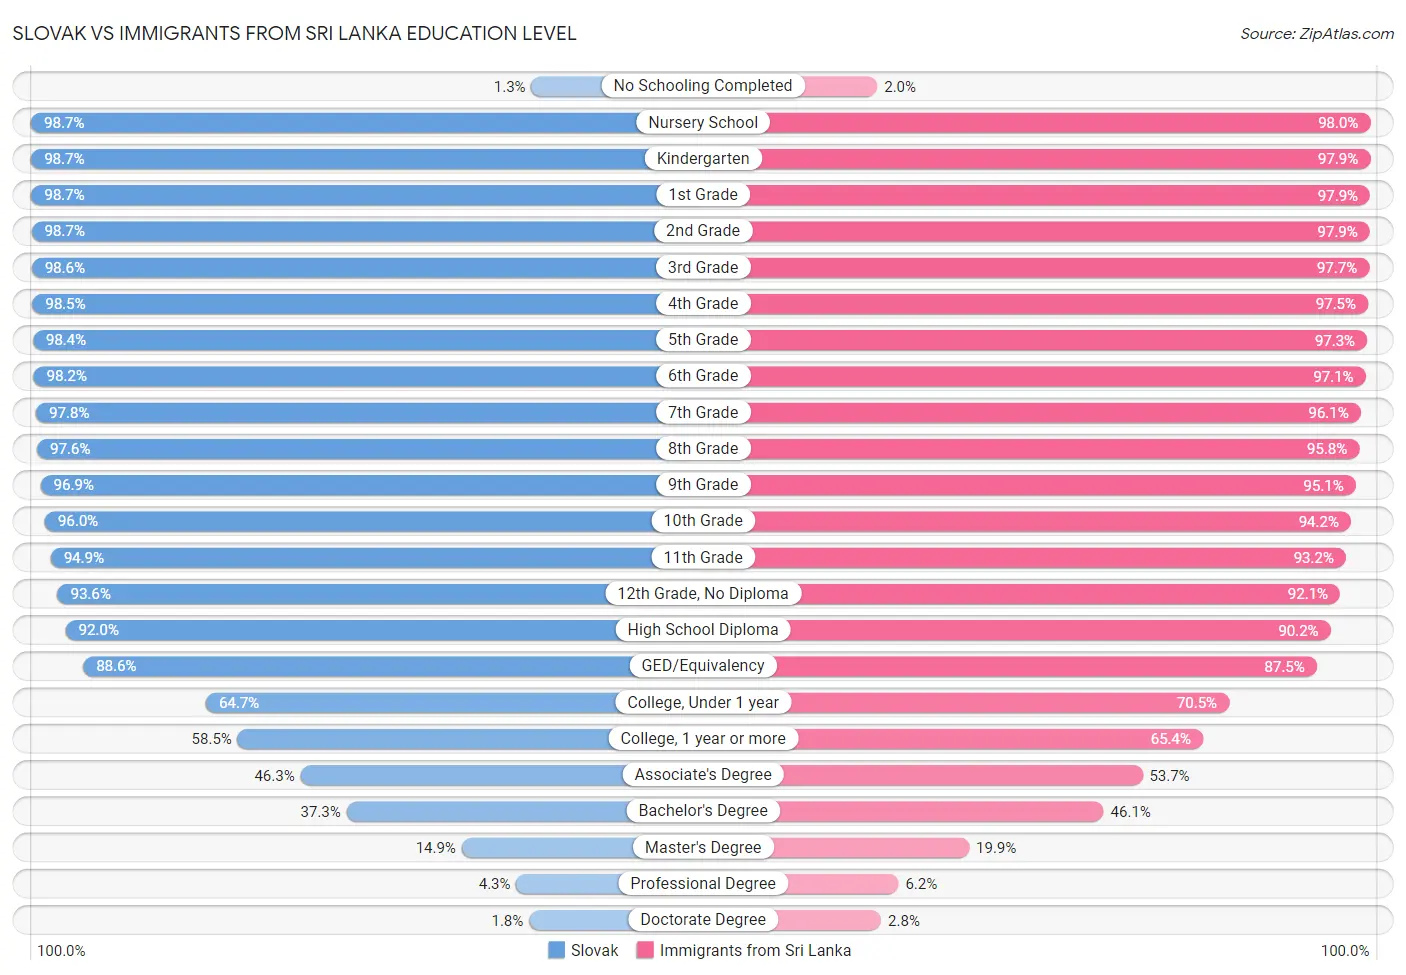 Slovak vs Immigrants from Sri Lanka Education Level